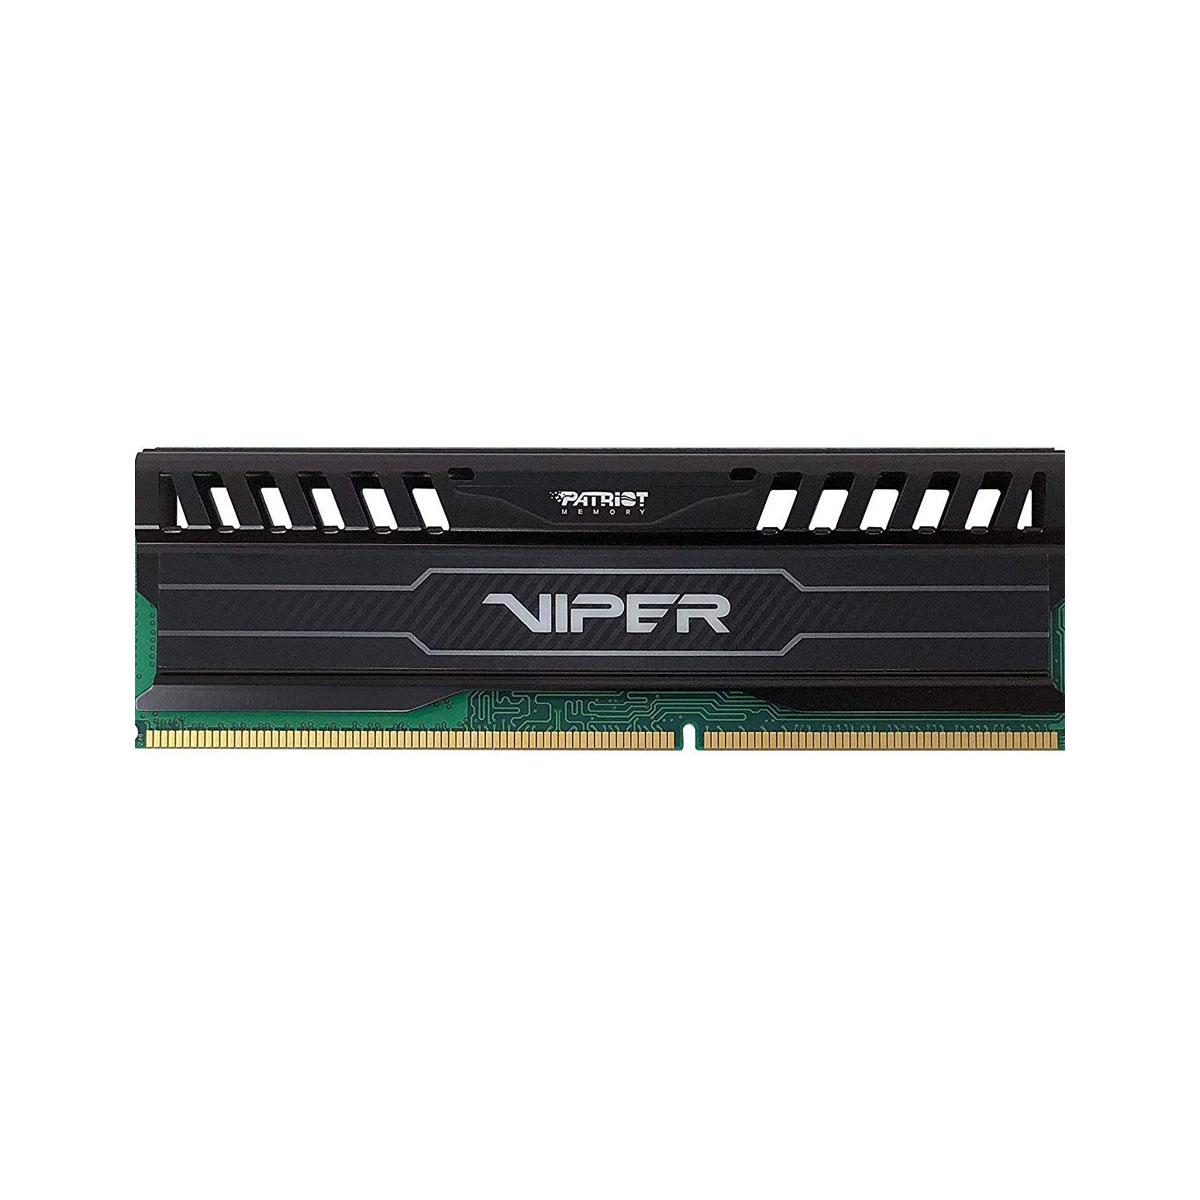 MEMORIA DIMM DDR3 PATRIOT (PV34G160C0) VIPER 3 4GB 1600MHZ, BLACK HEATSINK,CL10 - PATRIOT